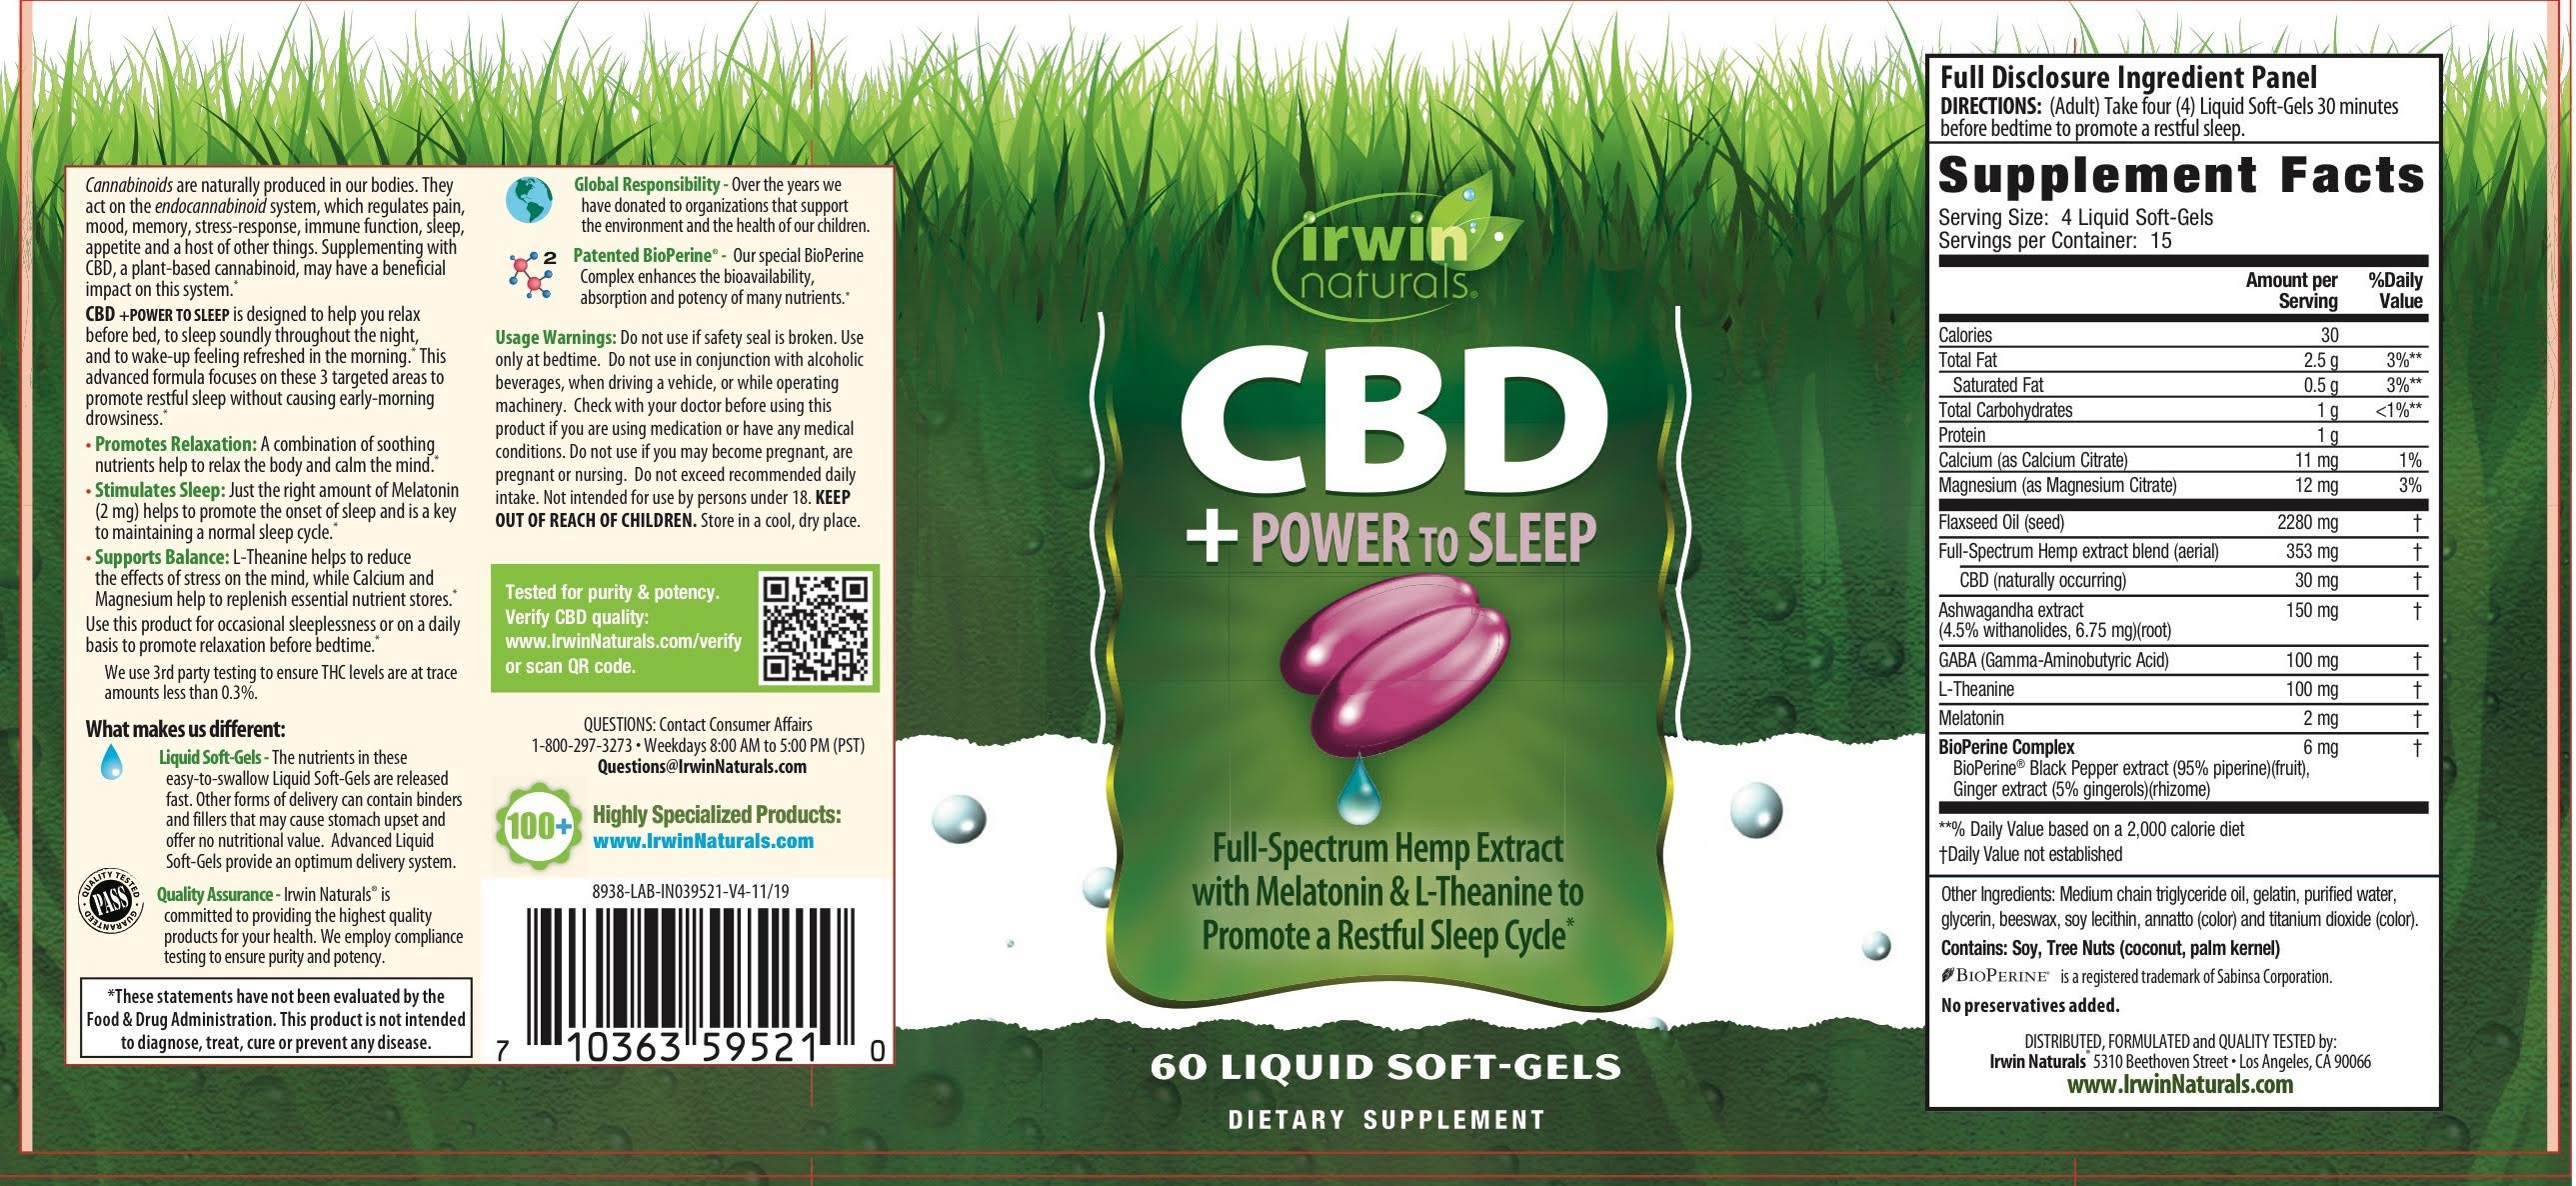 Irwin Naturals CBD + Power to Sleep, Liquid Soft-Gels - 60 softgels